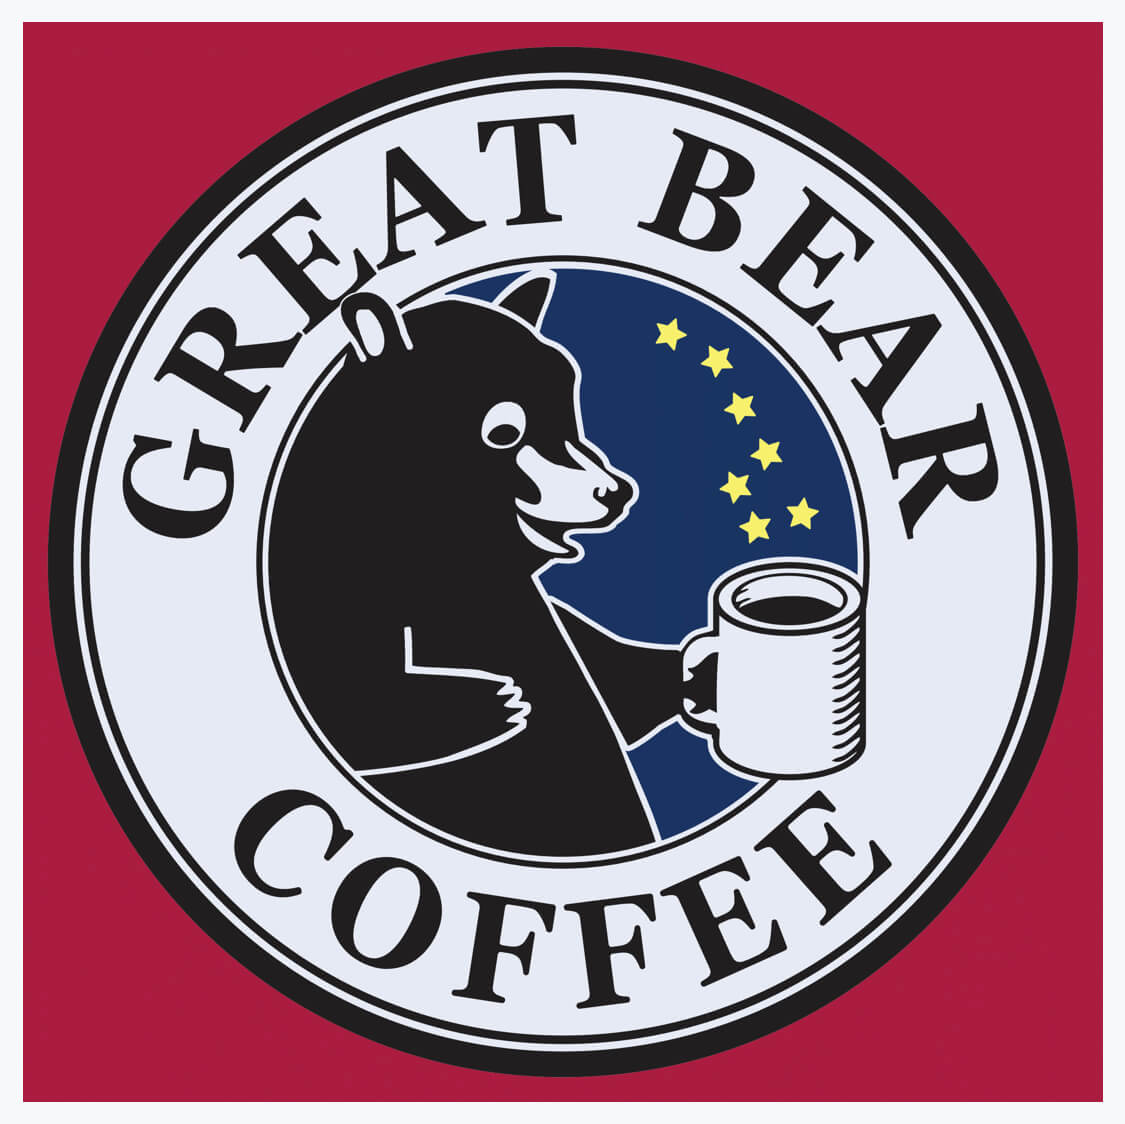 Great Bear Coffee